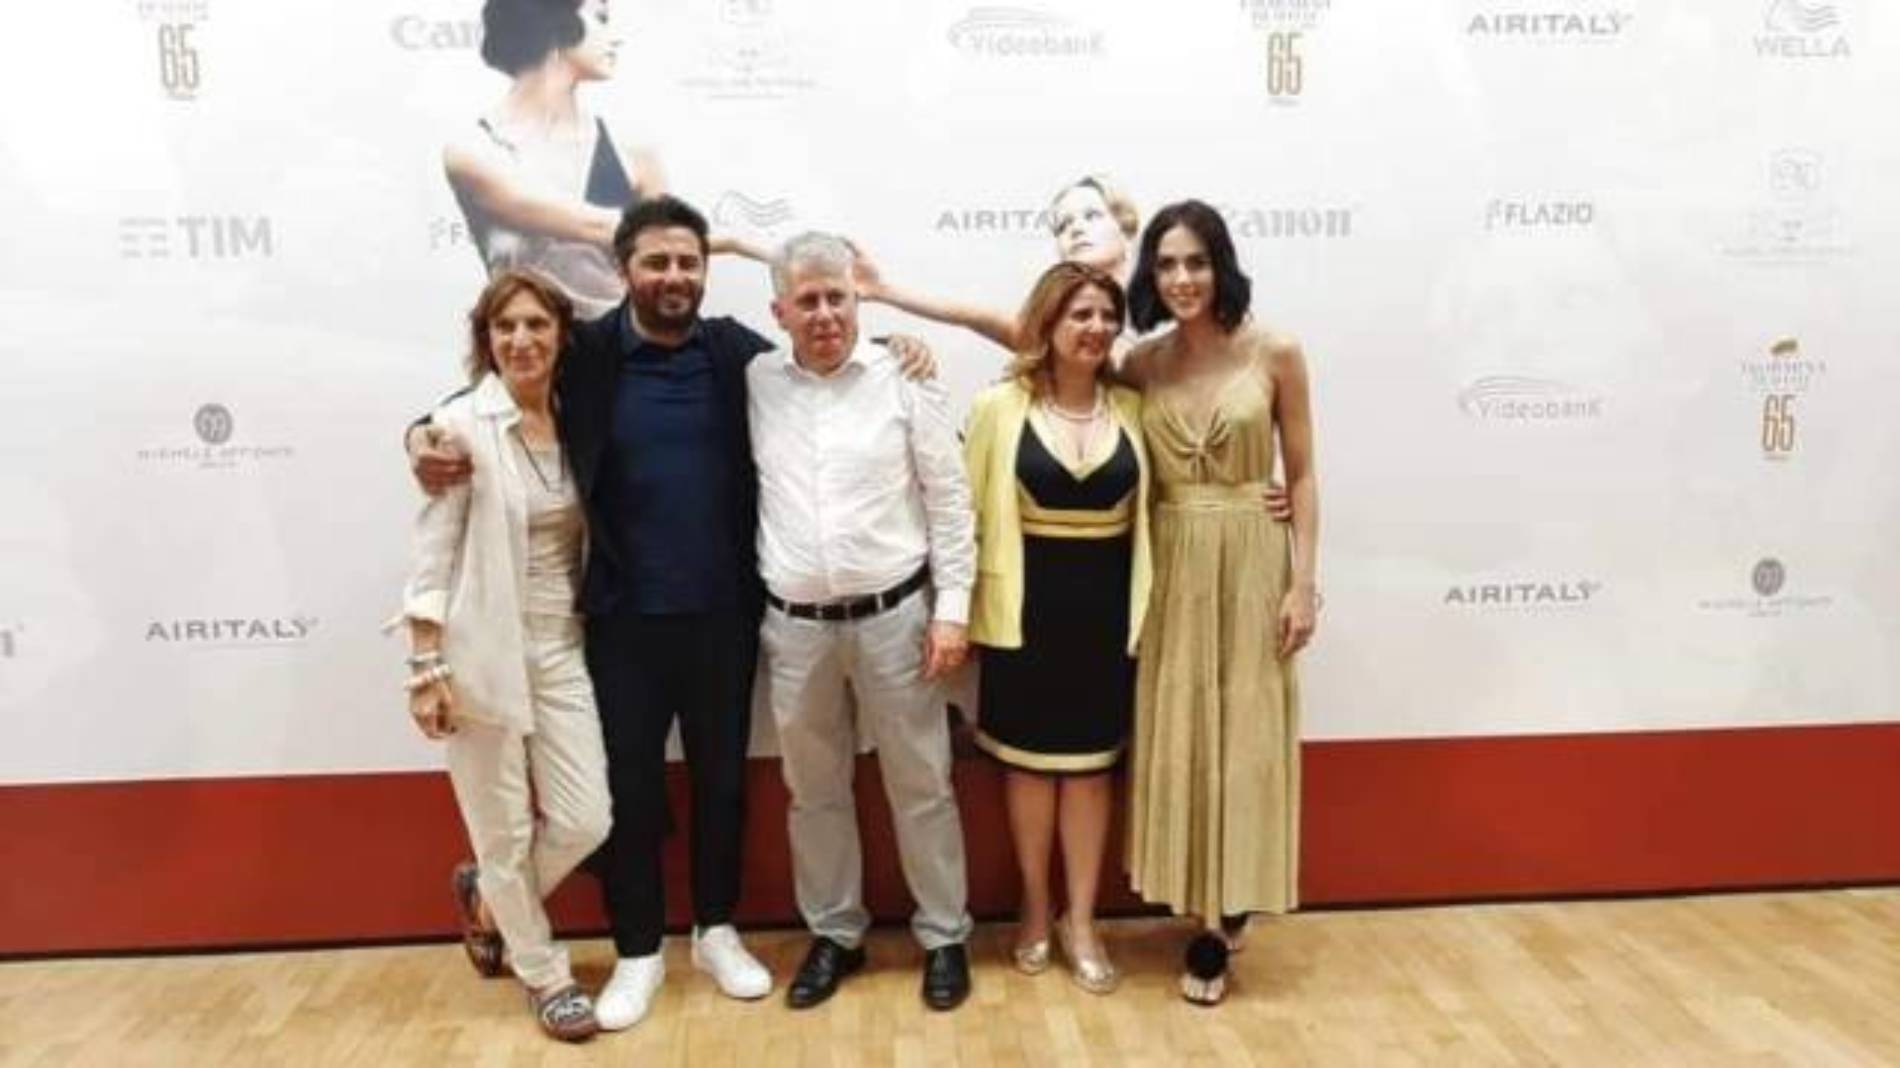 Taormina Film Festival 2019 – 65° Edizione